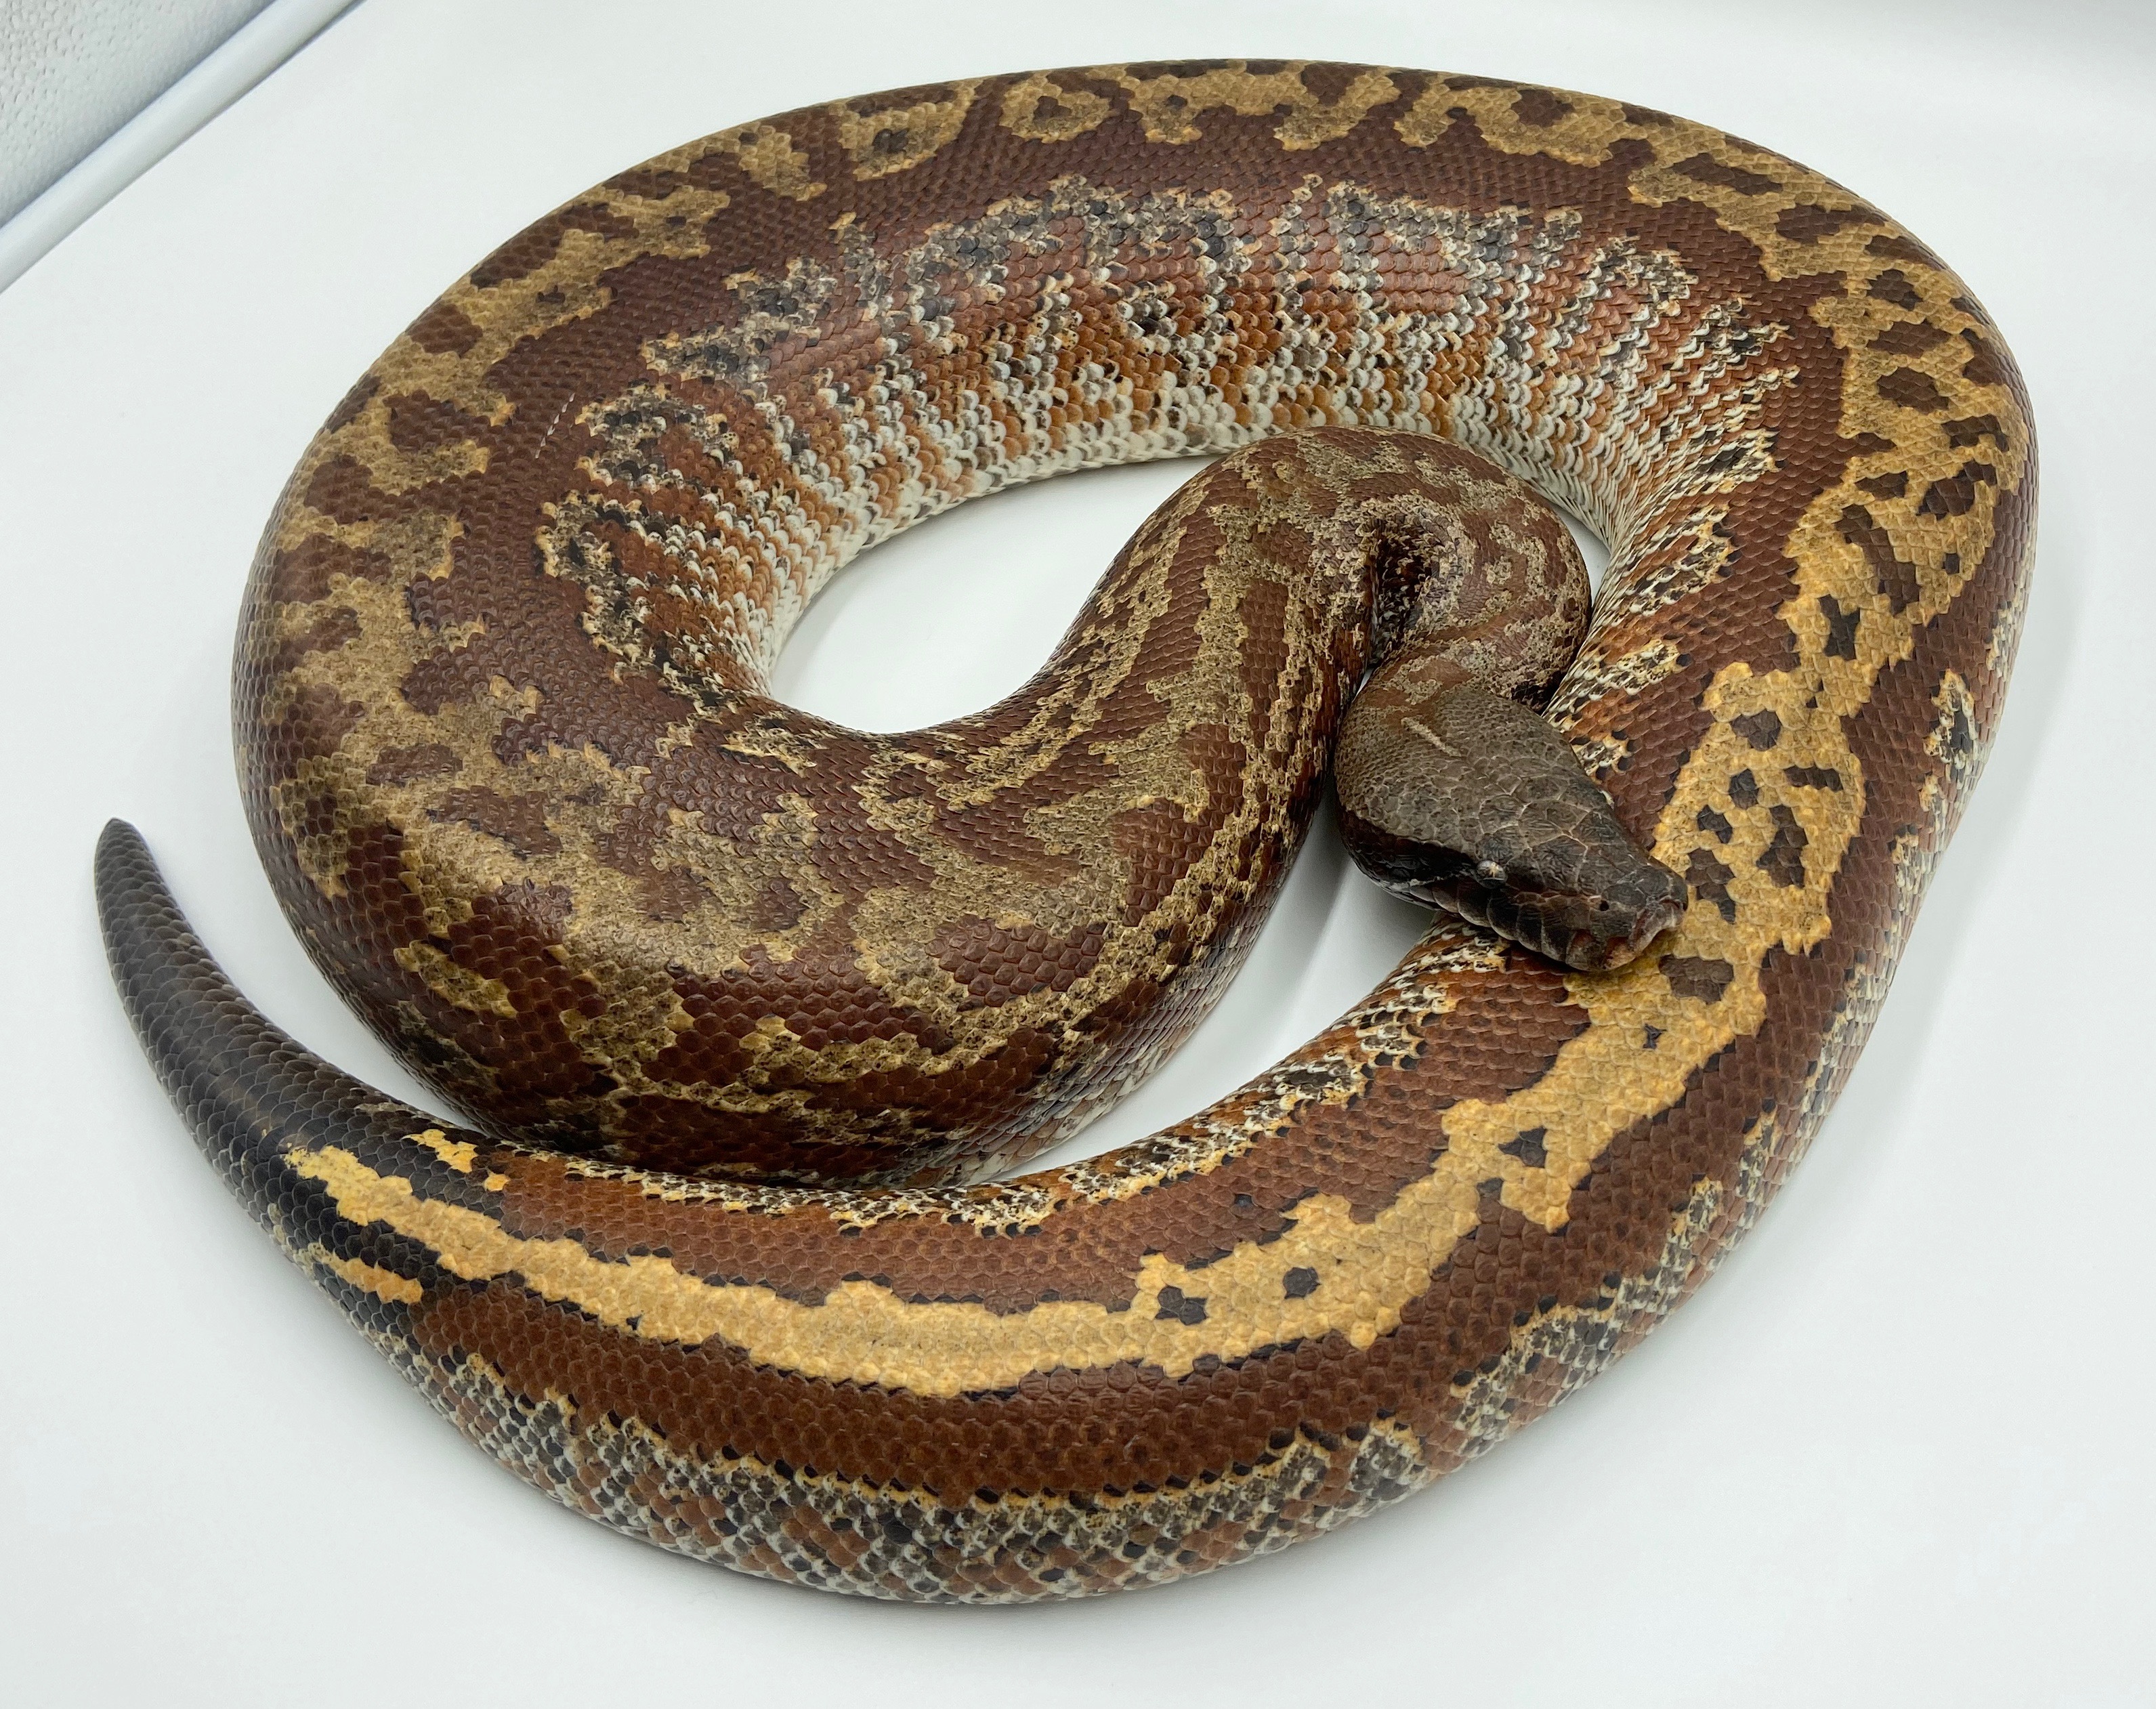 Batik Blood Python by Giantkeeper Reptiles